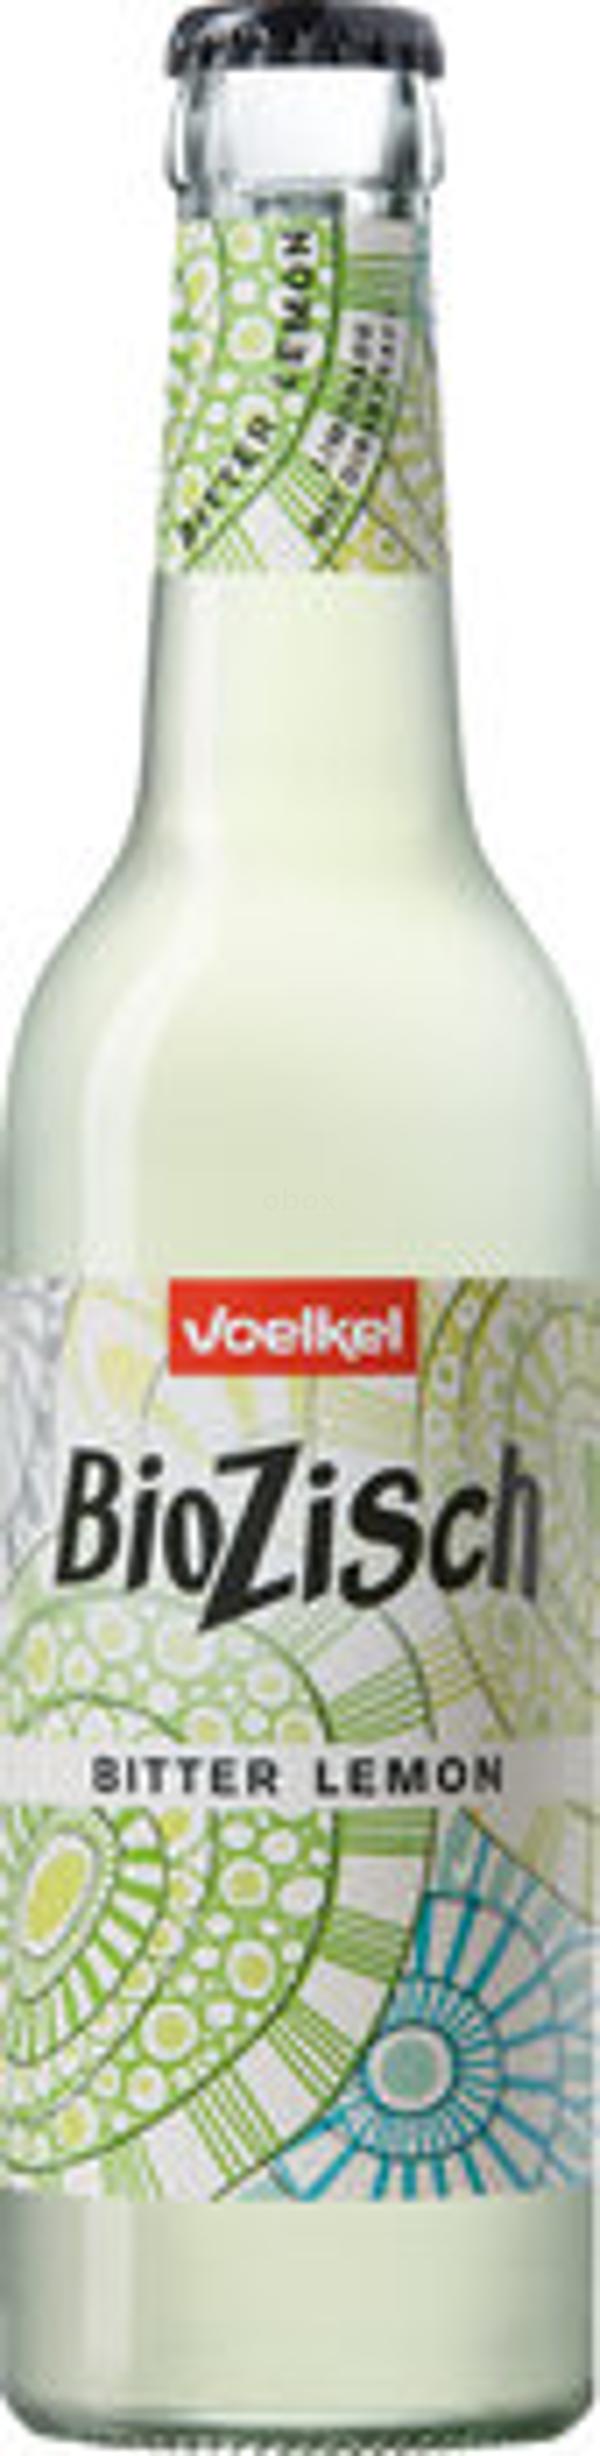 Produktfoto zu BioZisch Bitter Lemon 0,33L